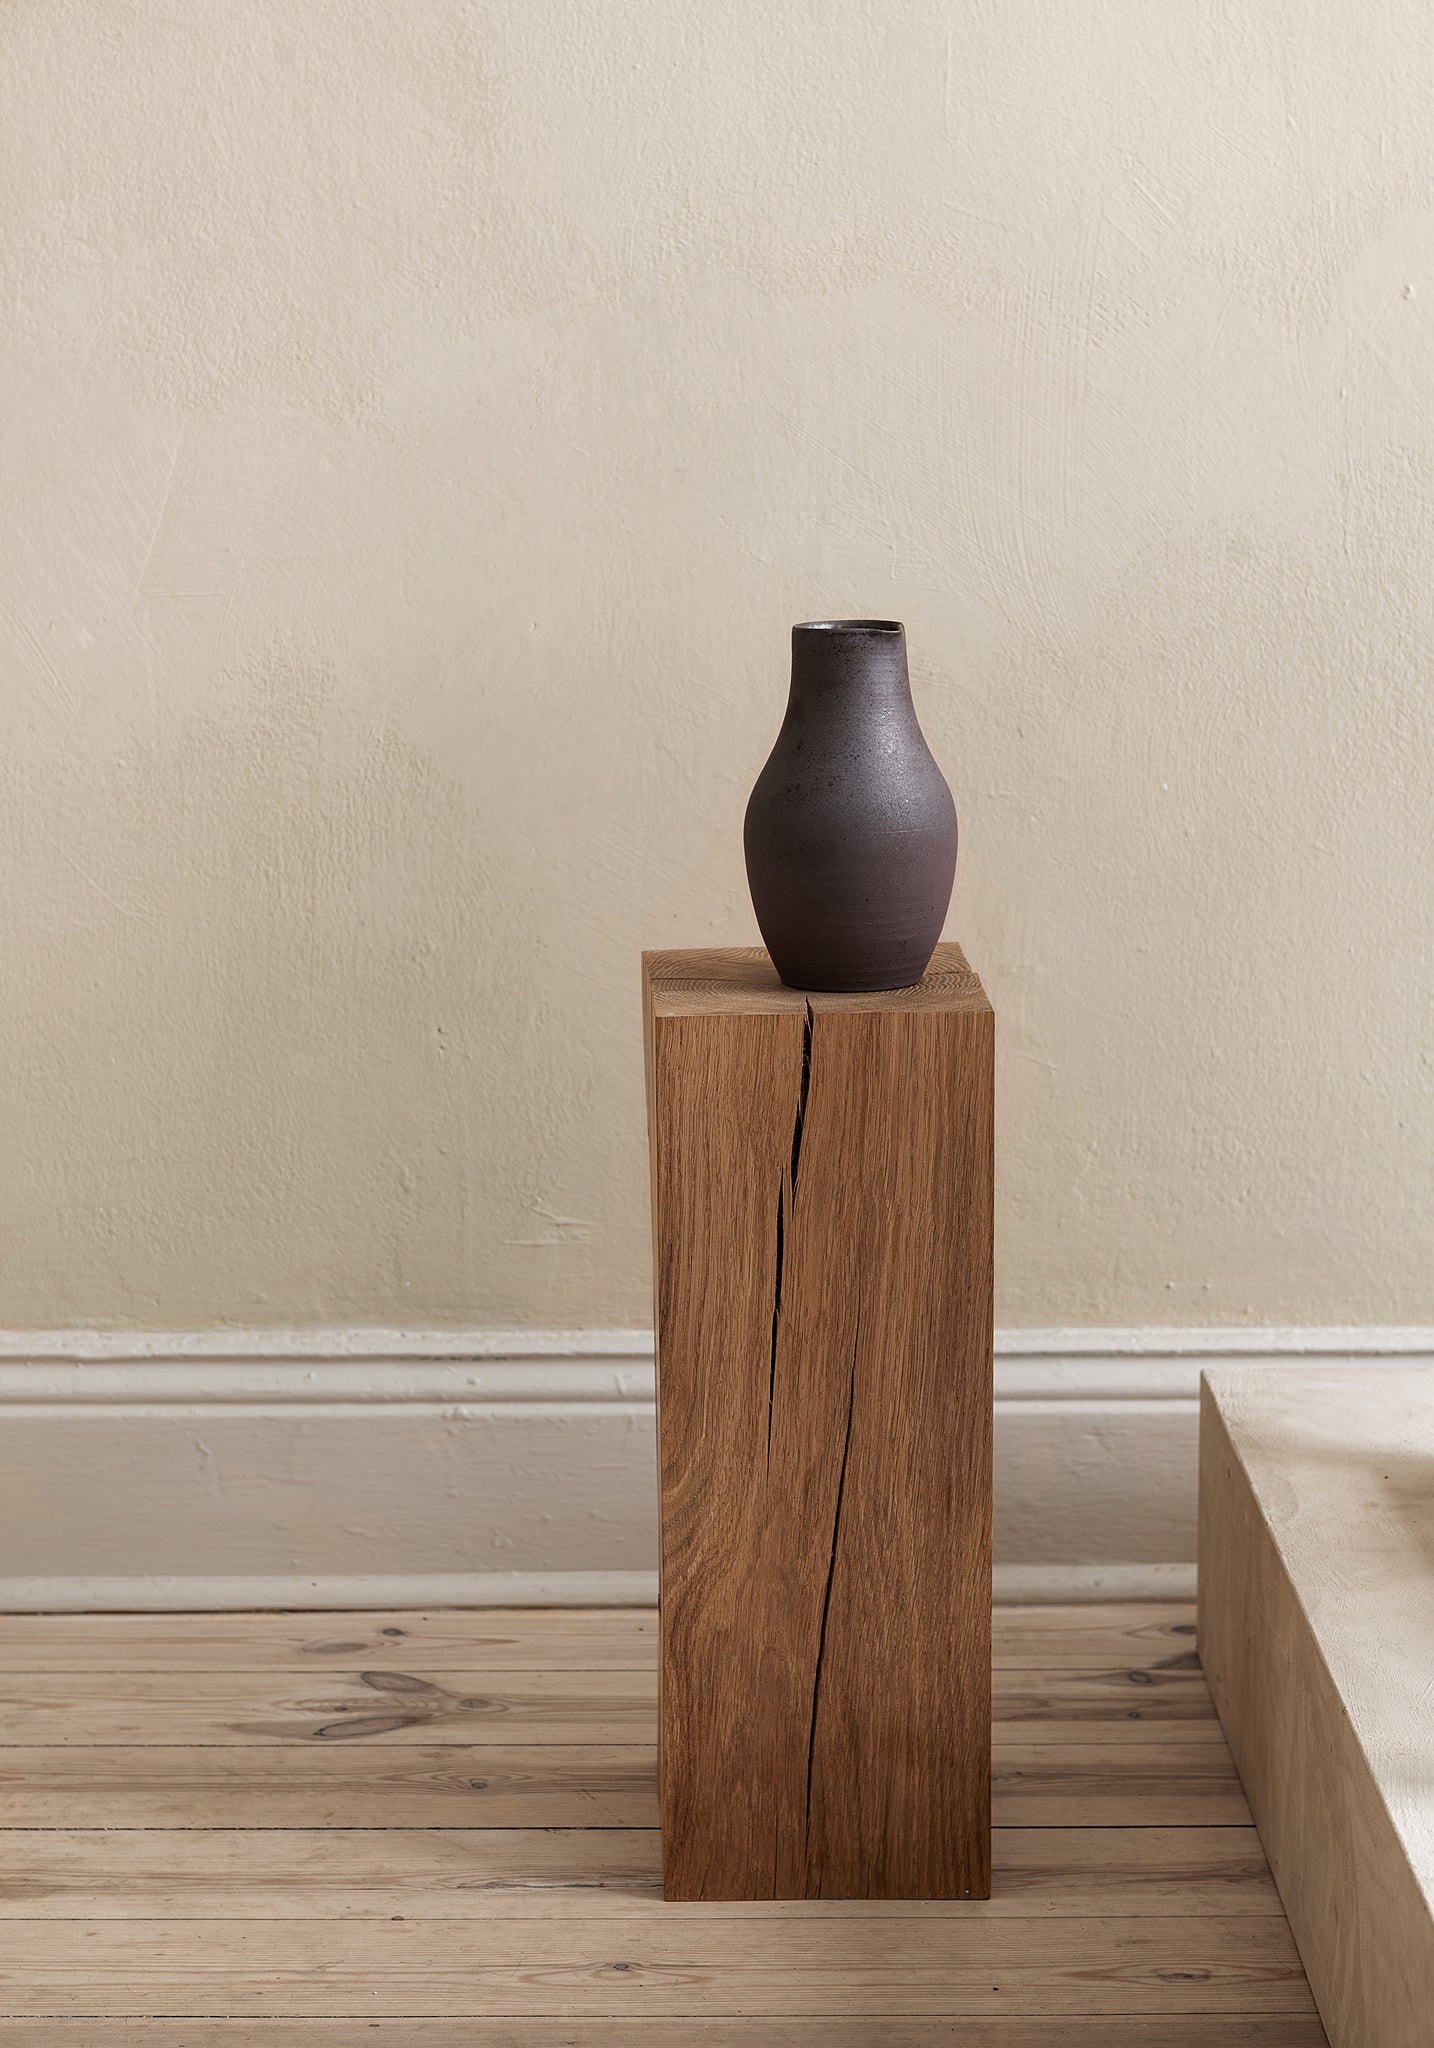 Black ceramic sake jug set on a display pedestal in neutral interior